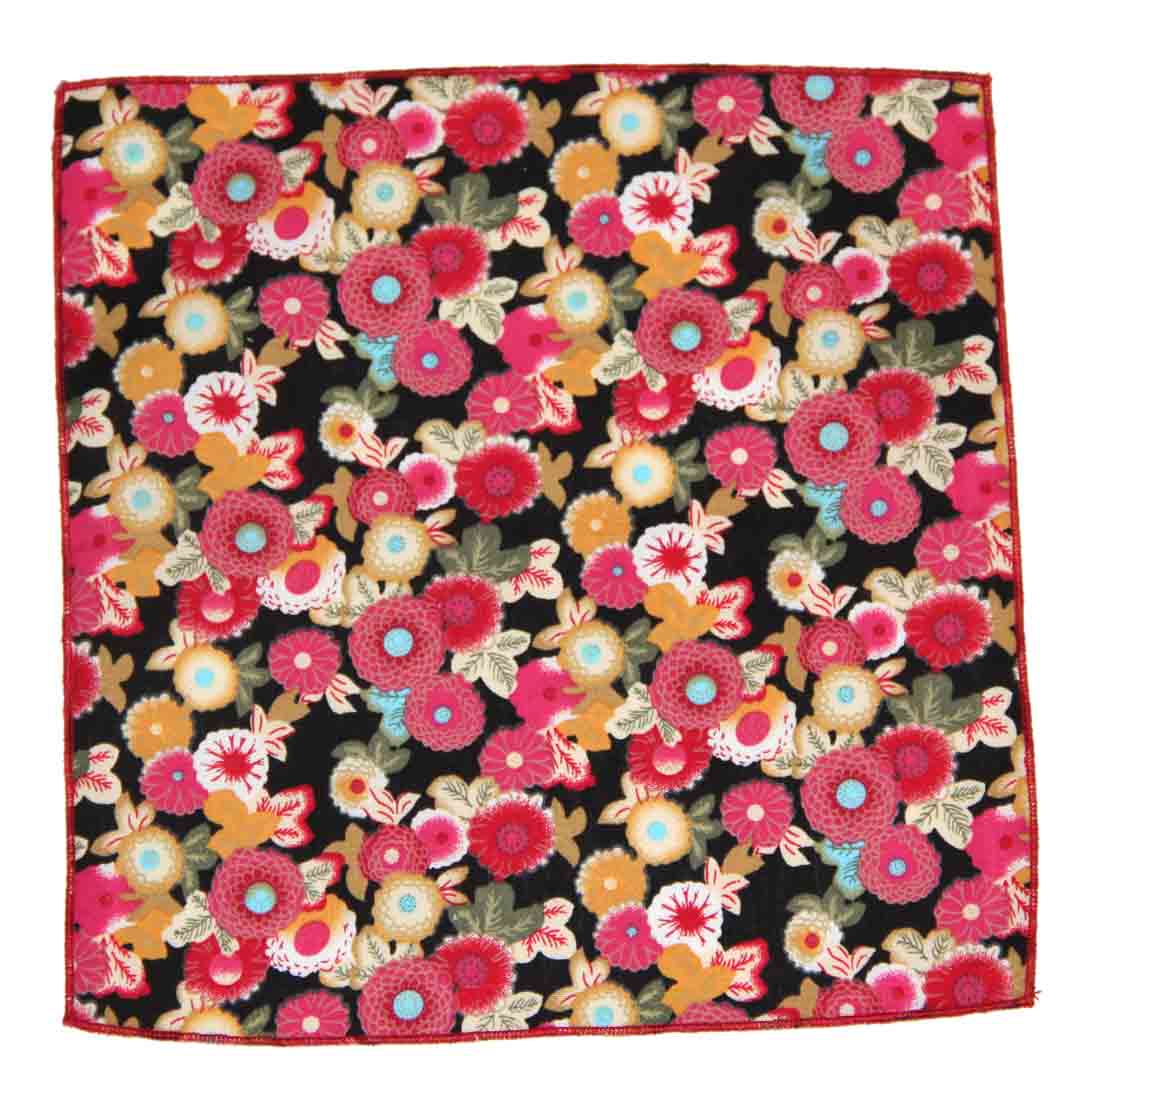 Gascoigne Pocket Square Floral Cotton Pink Red Yellow Black Men's